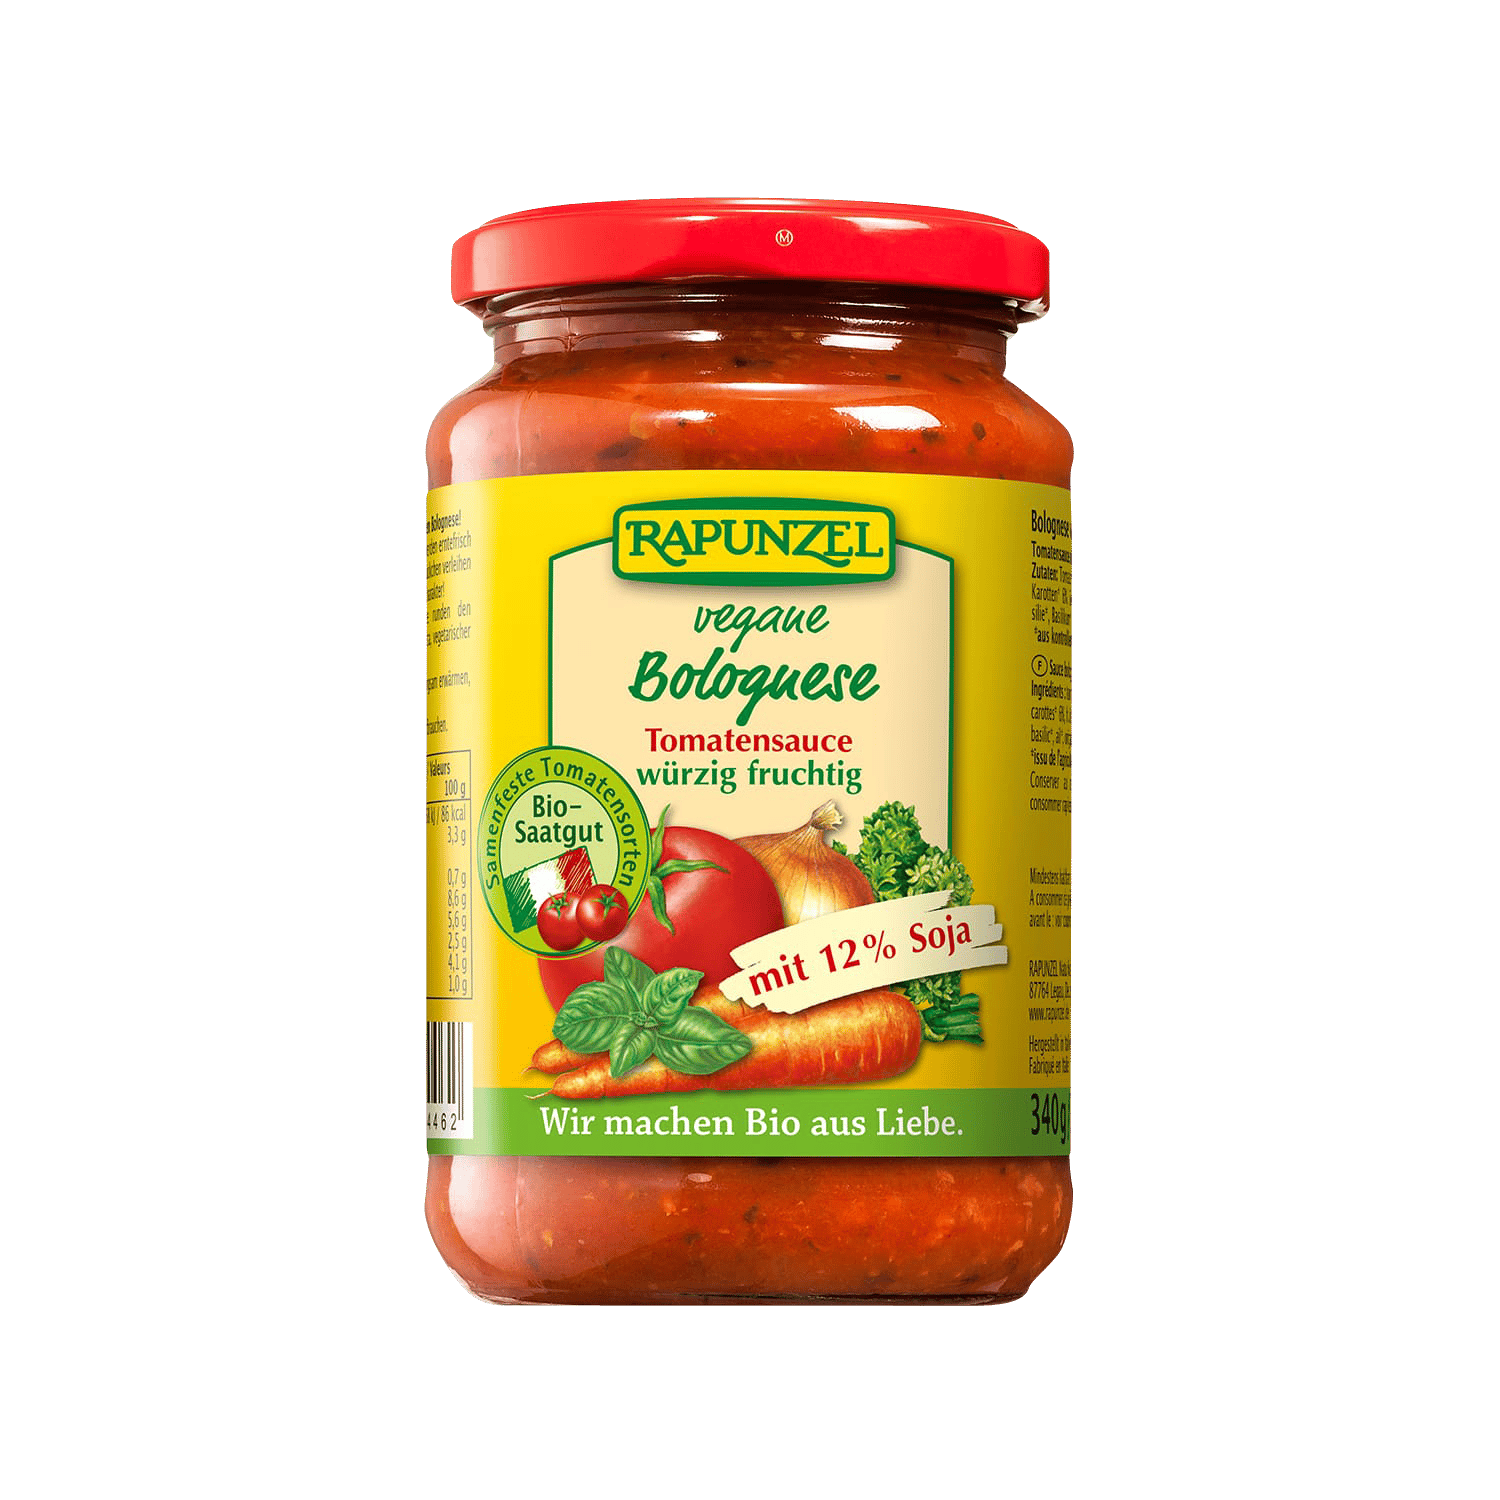 Vegan Bolognese Tomato Sauce, Organic, 350g